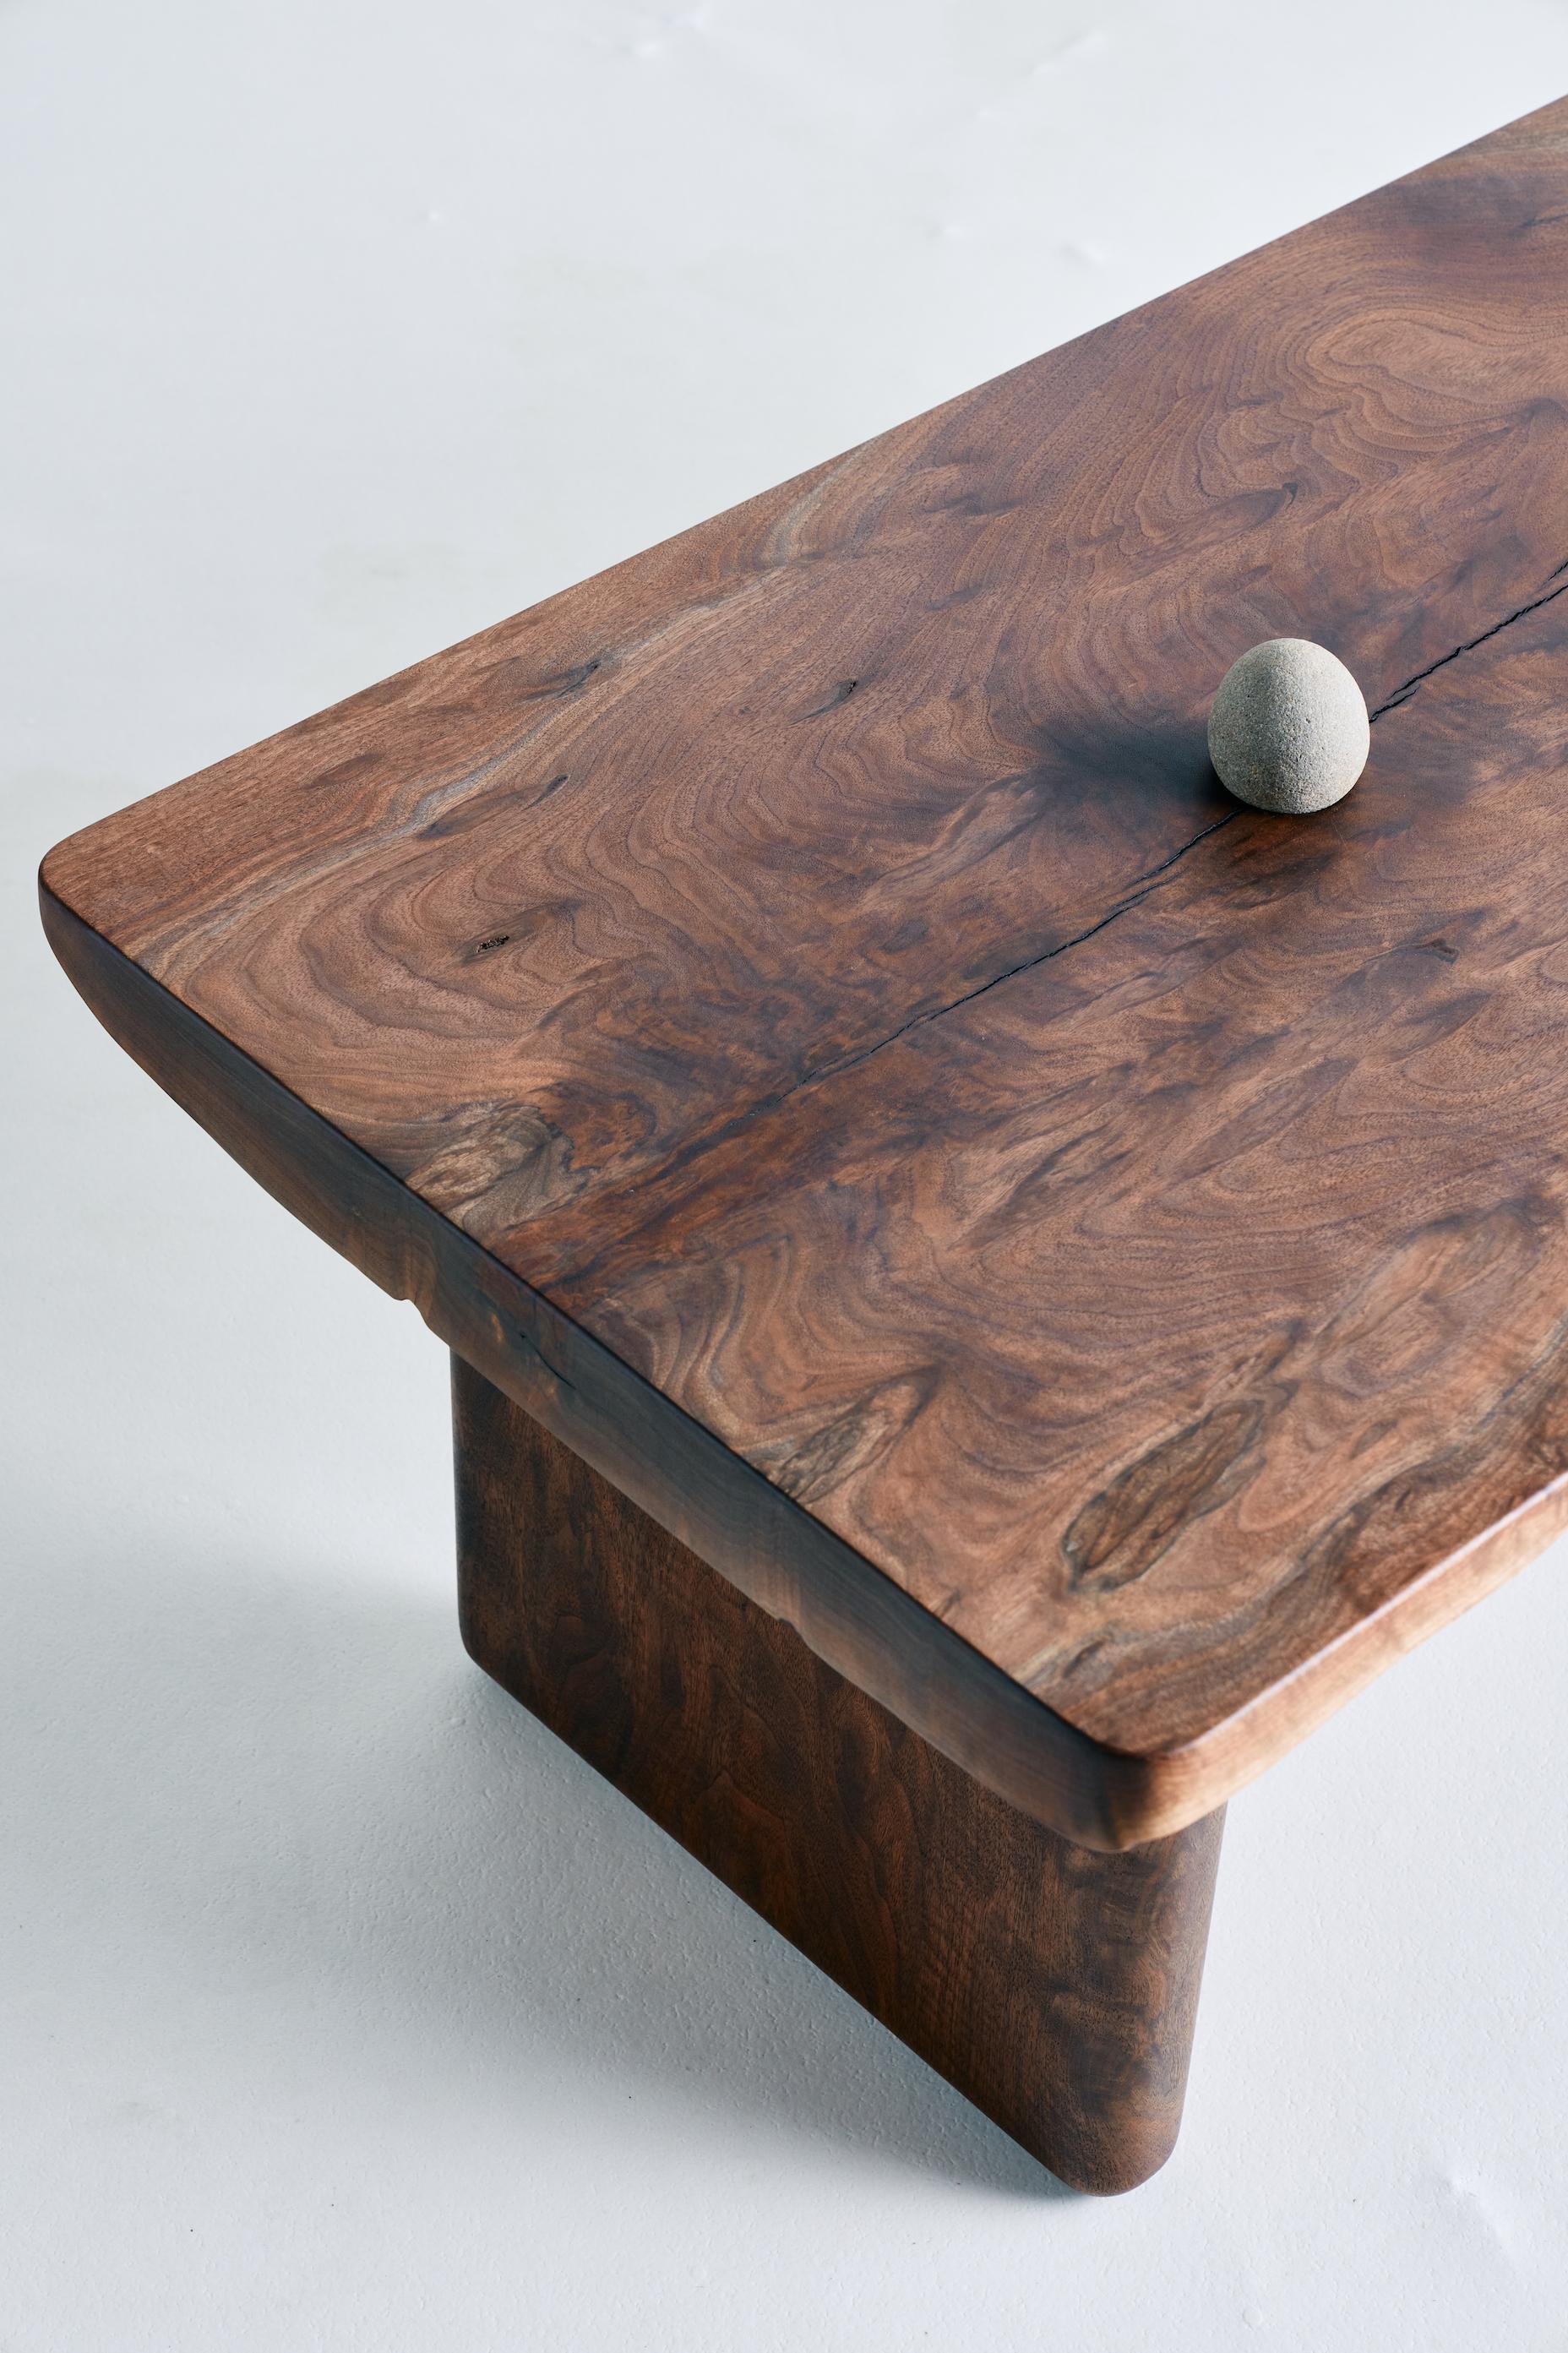 stone slab table